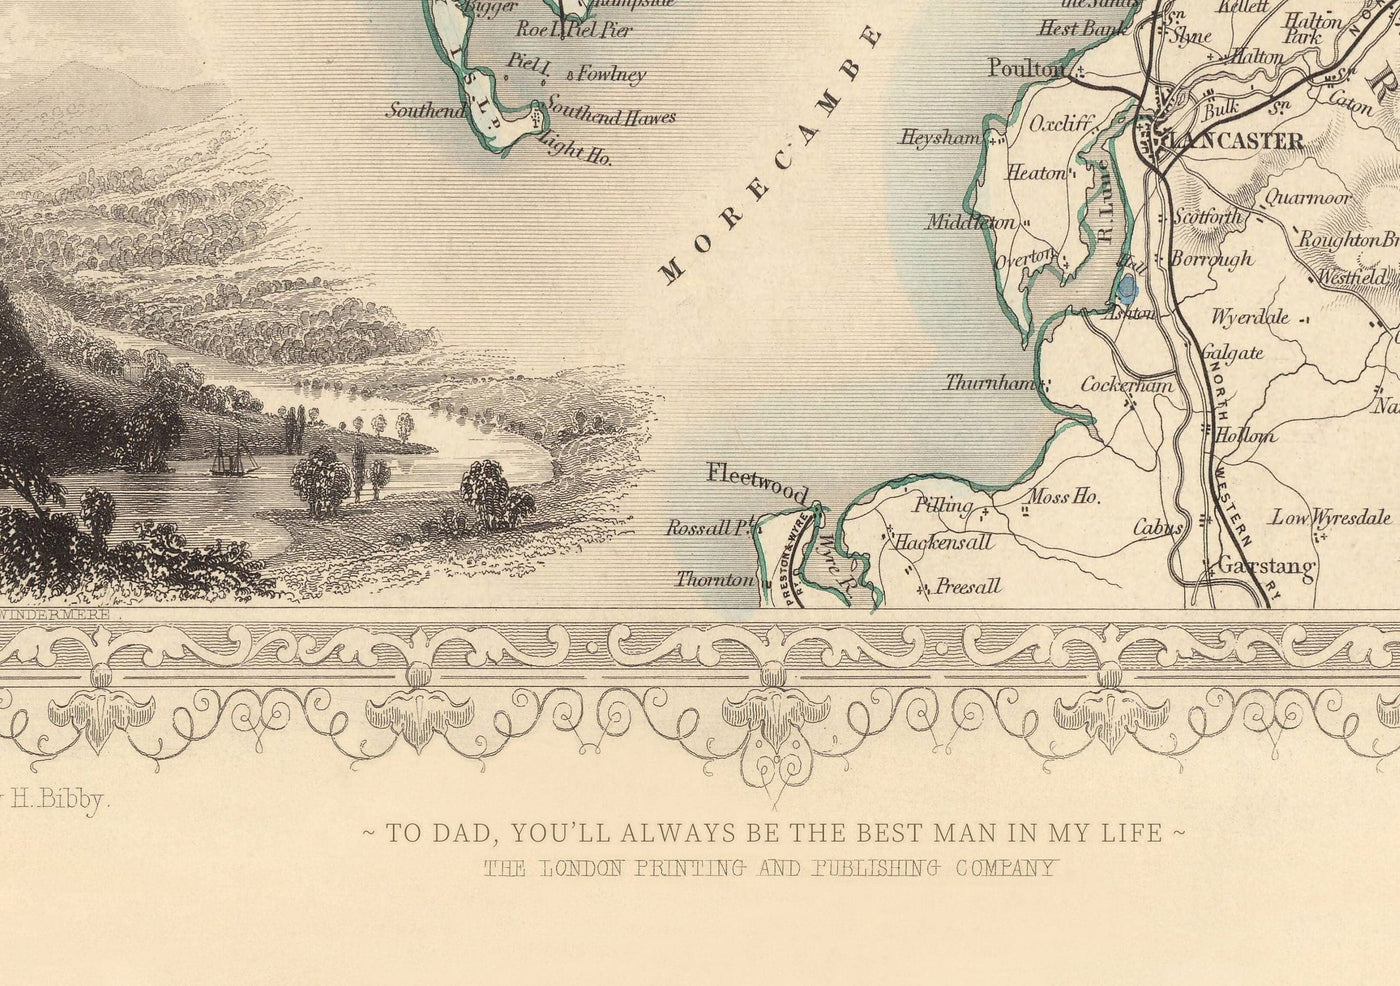 Old Map of Atlantic Islands, 1851 by Tallis & Rapkin - Bermuda, Azores, Canaries, Tenerife, Madeira, Cape Verde